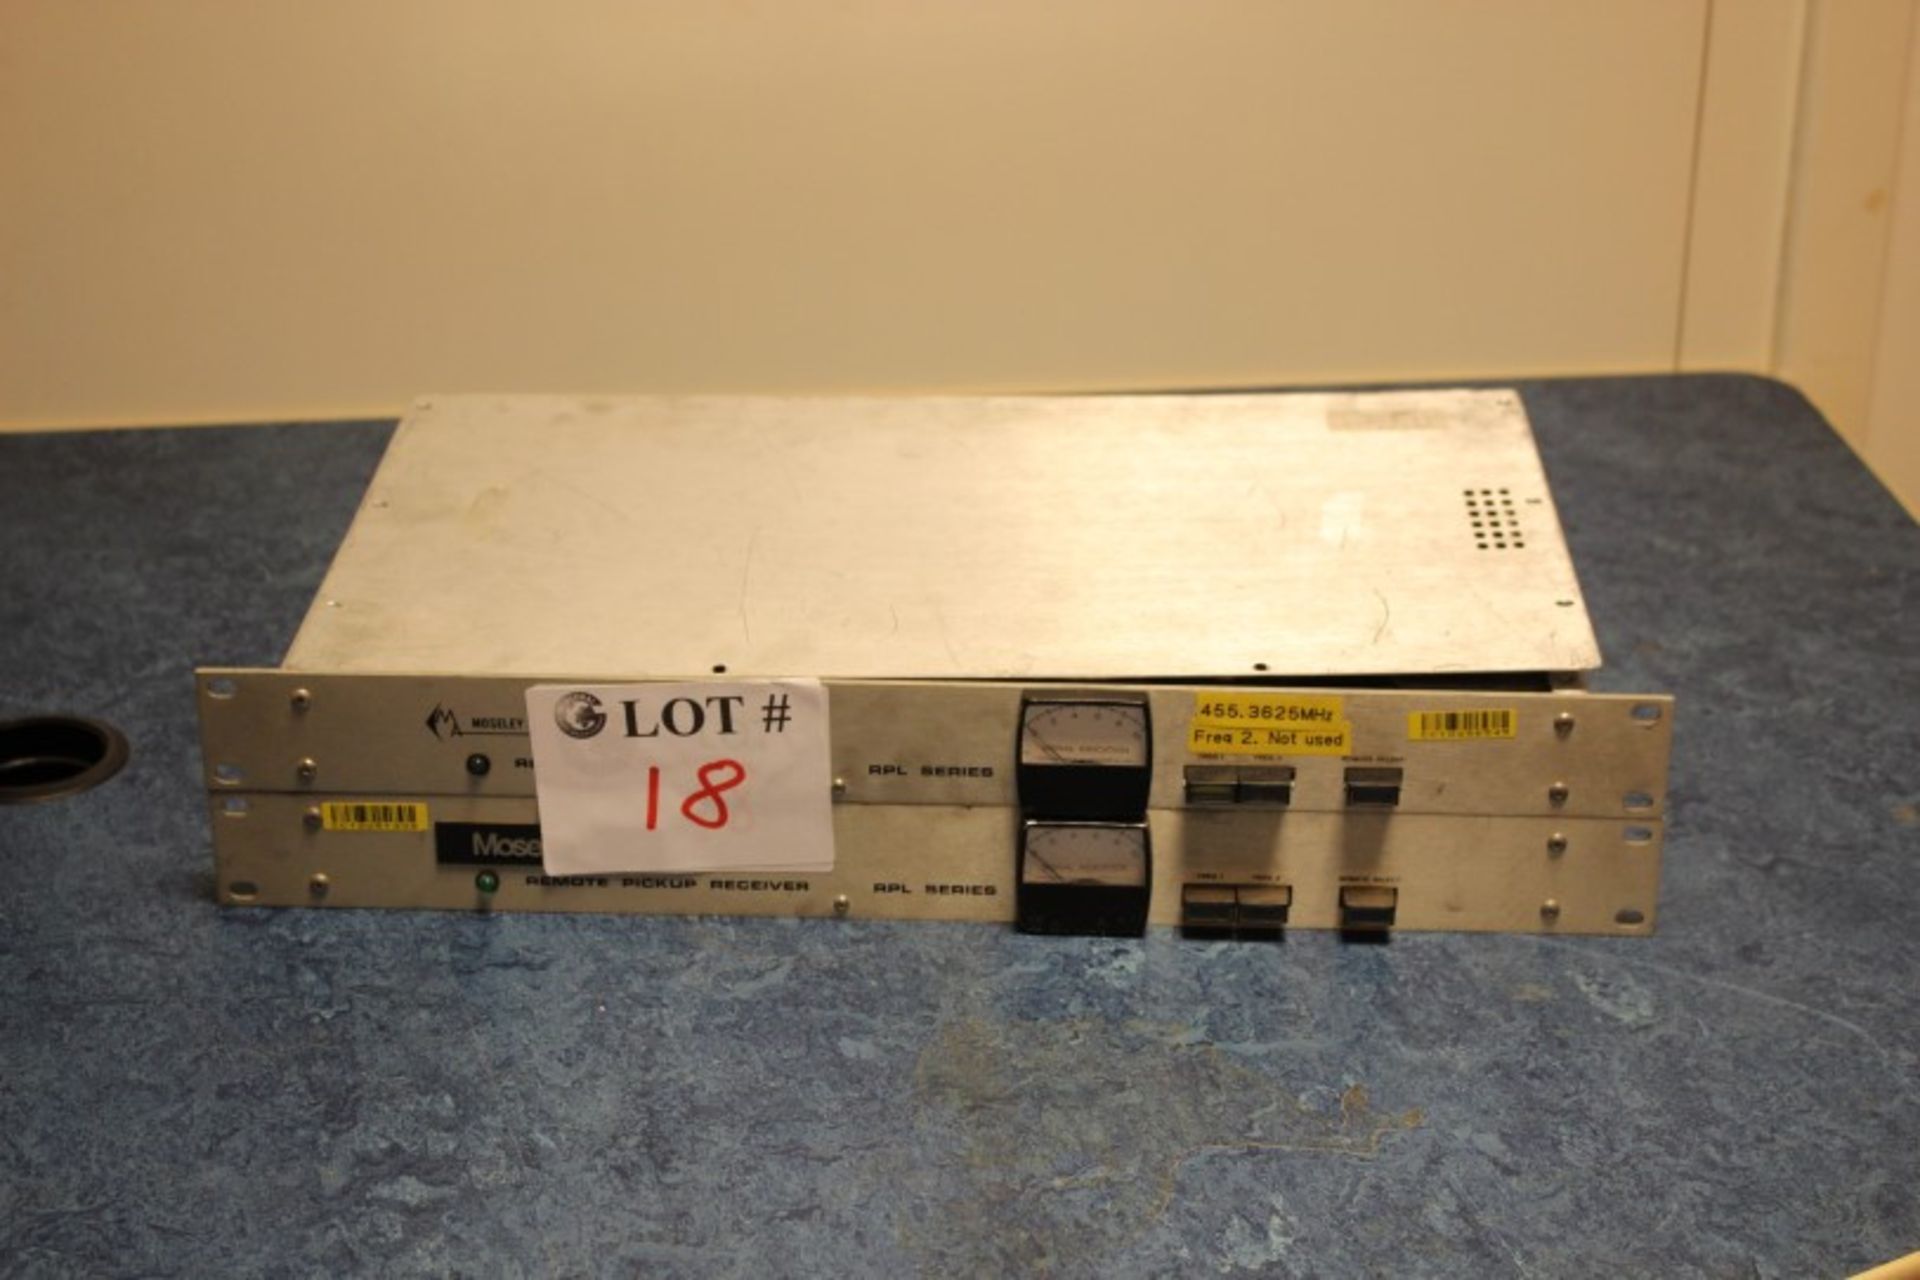 2 x Moseley Associates Inc. Remote Pickup Receiver RPL Series RPL-4C - Vintage Broadcast Receivers